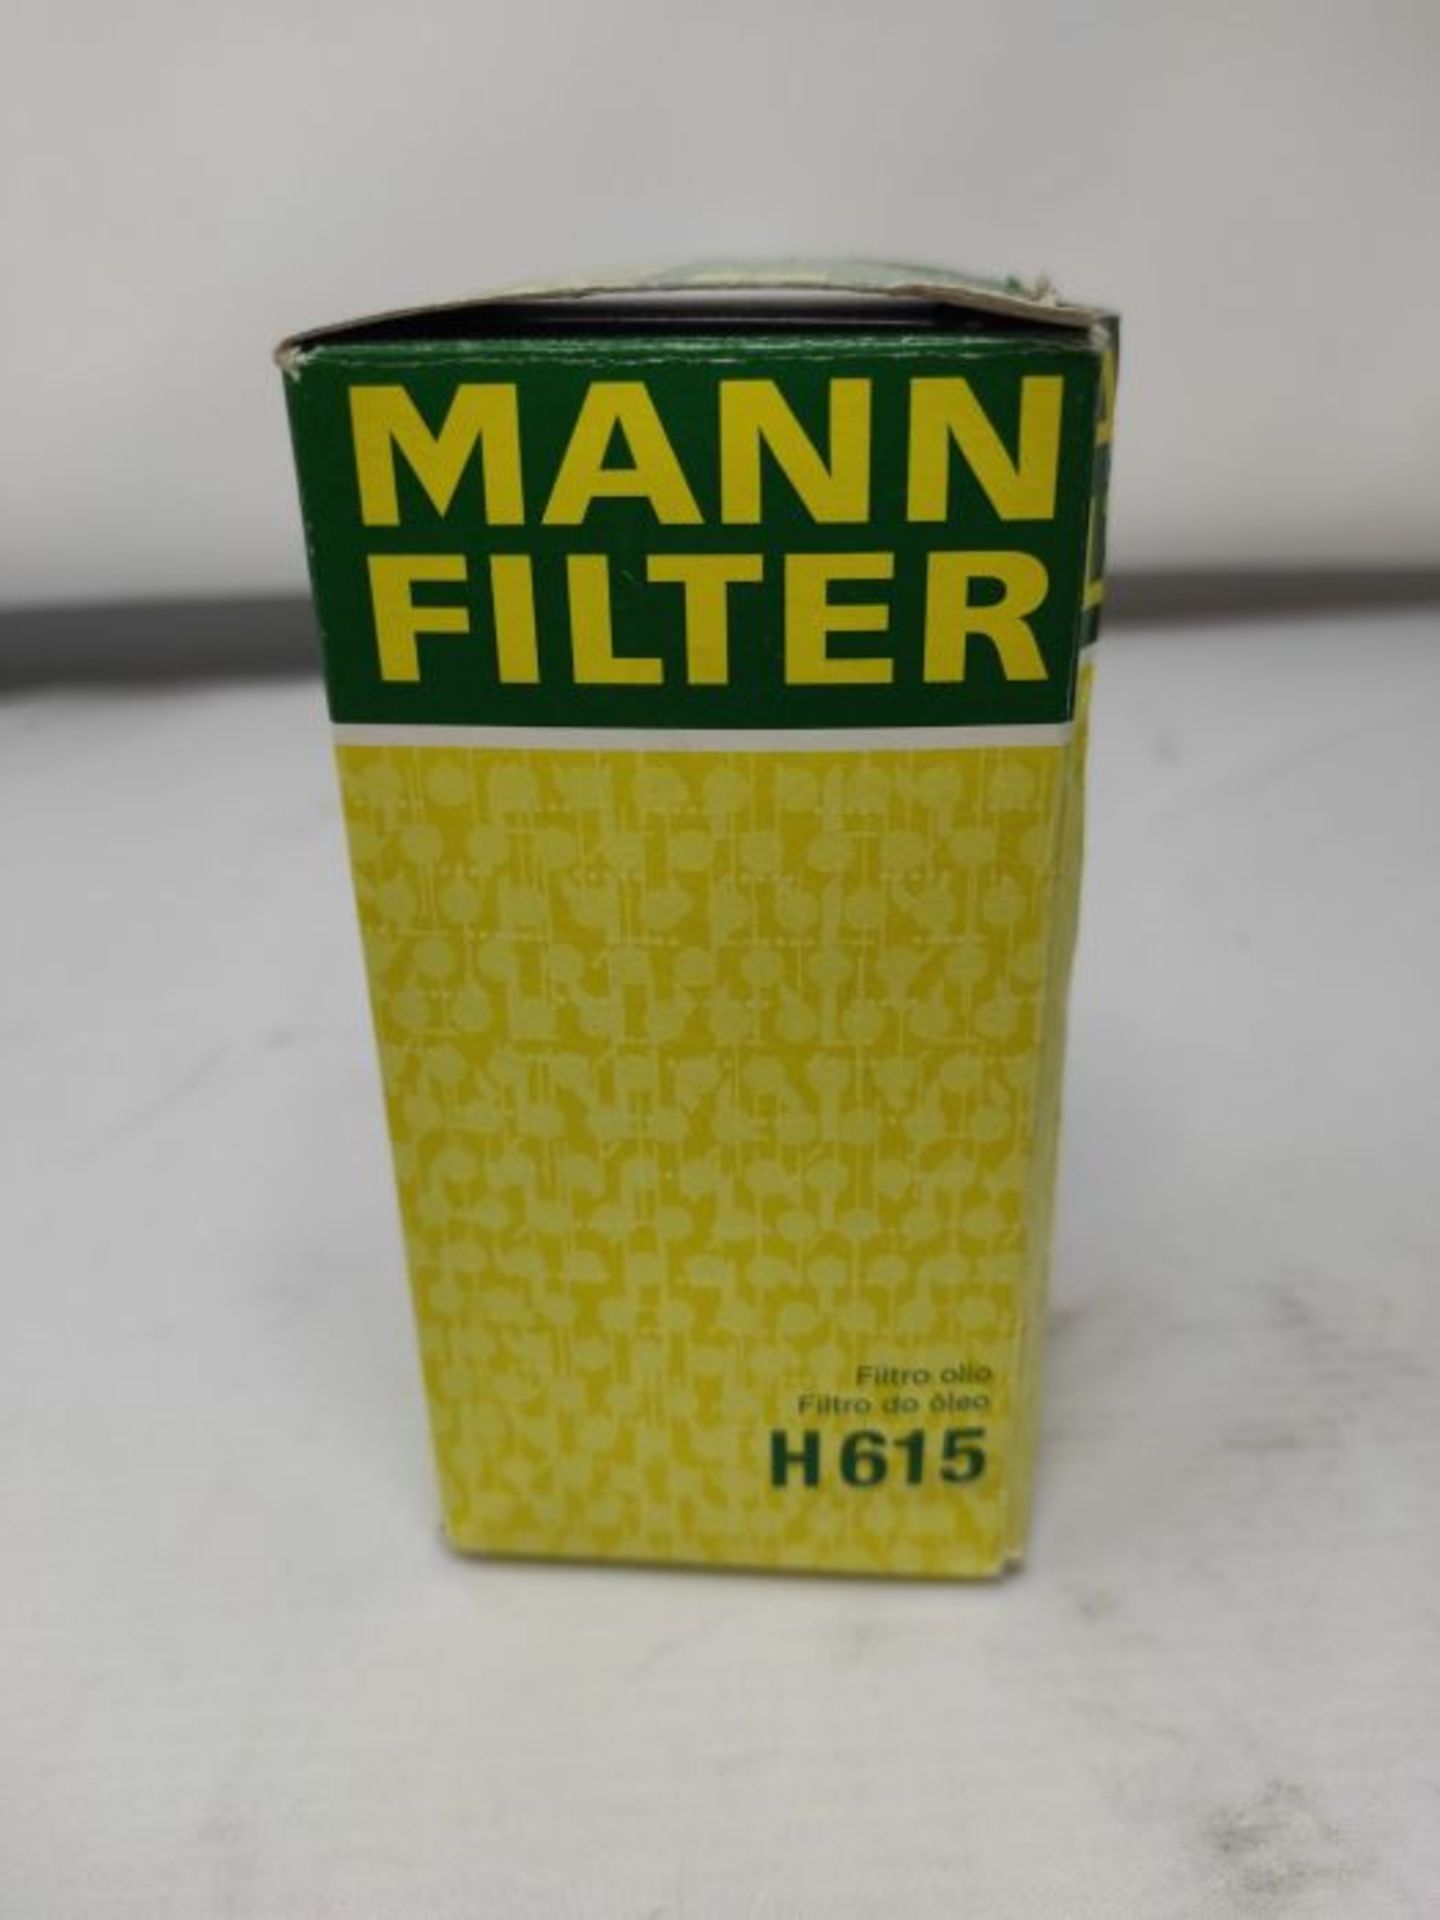 MannHummel H615 Filtro dell'olio - Image 2 of 3